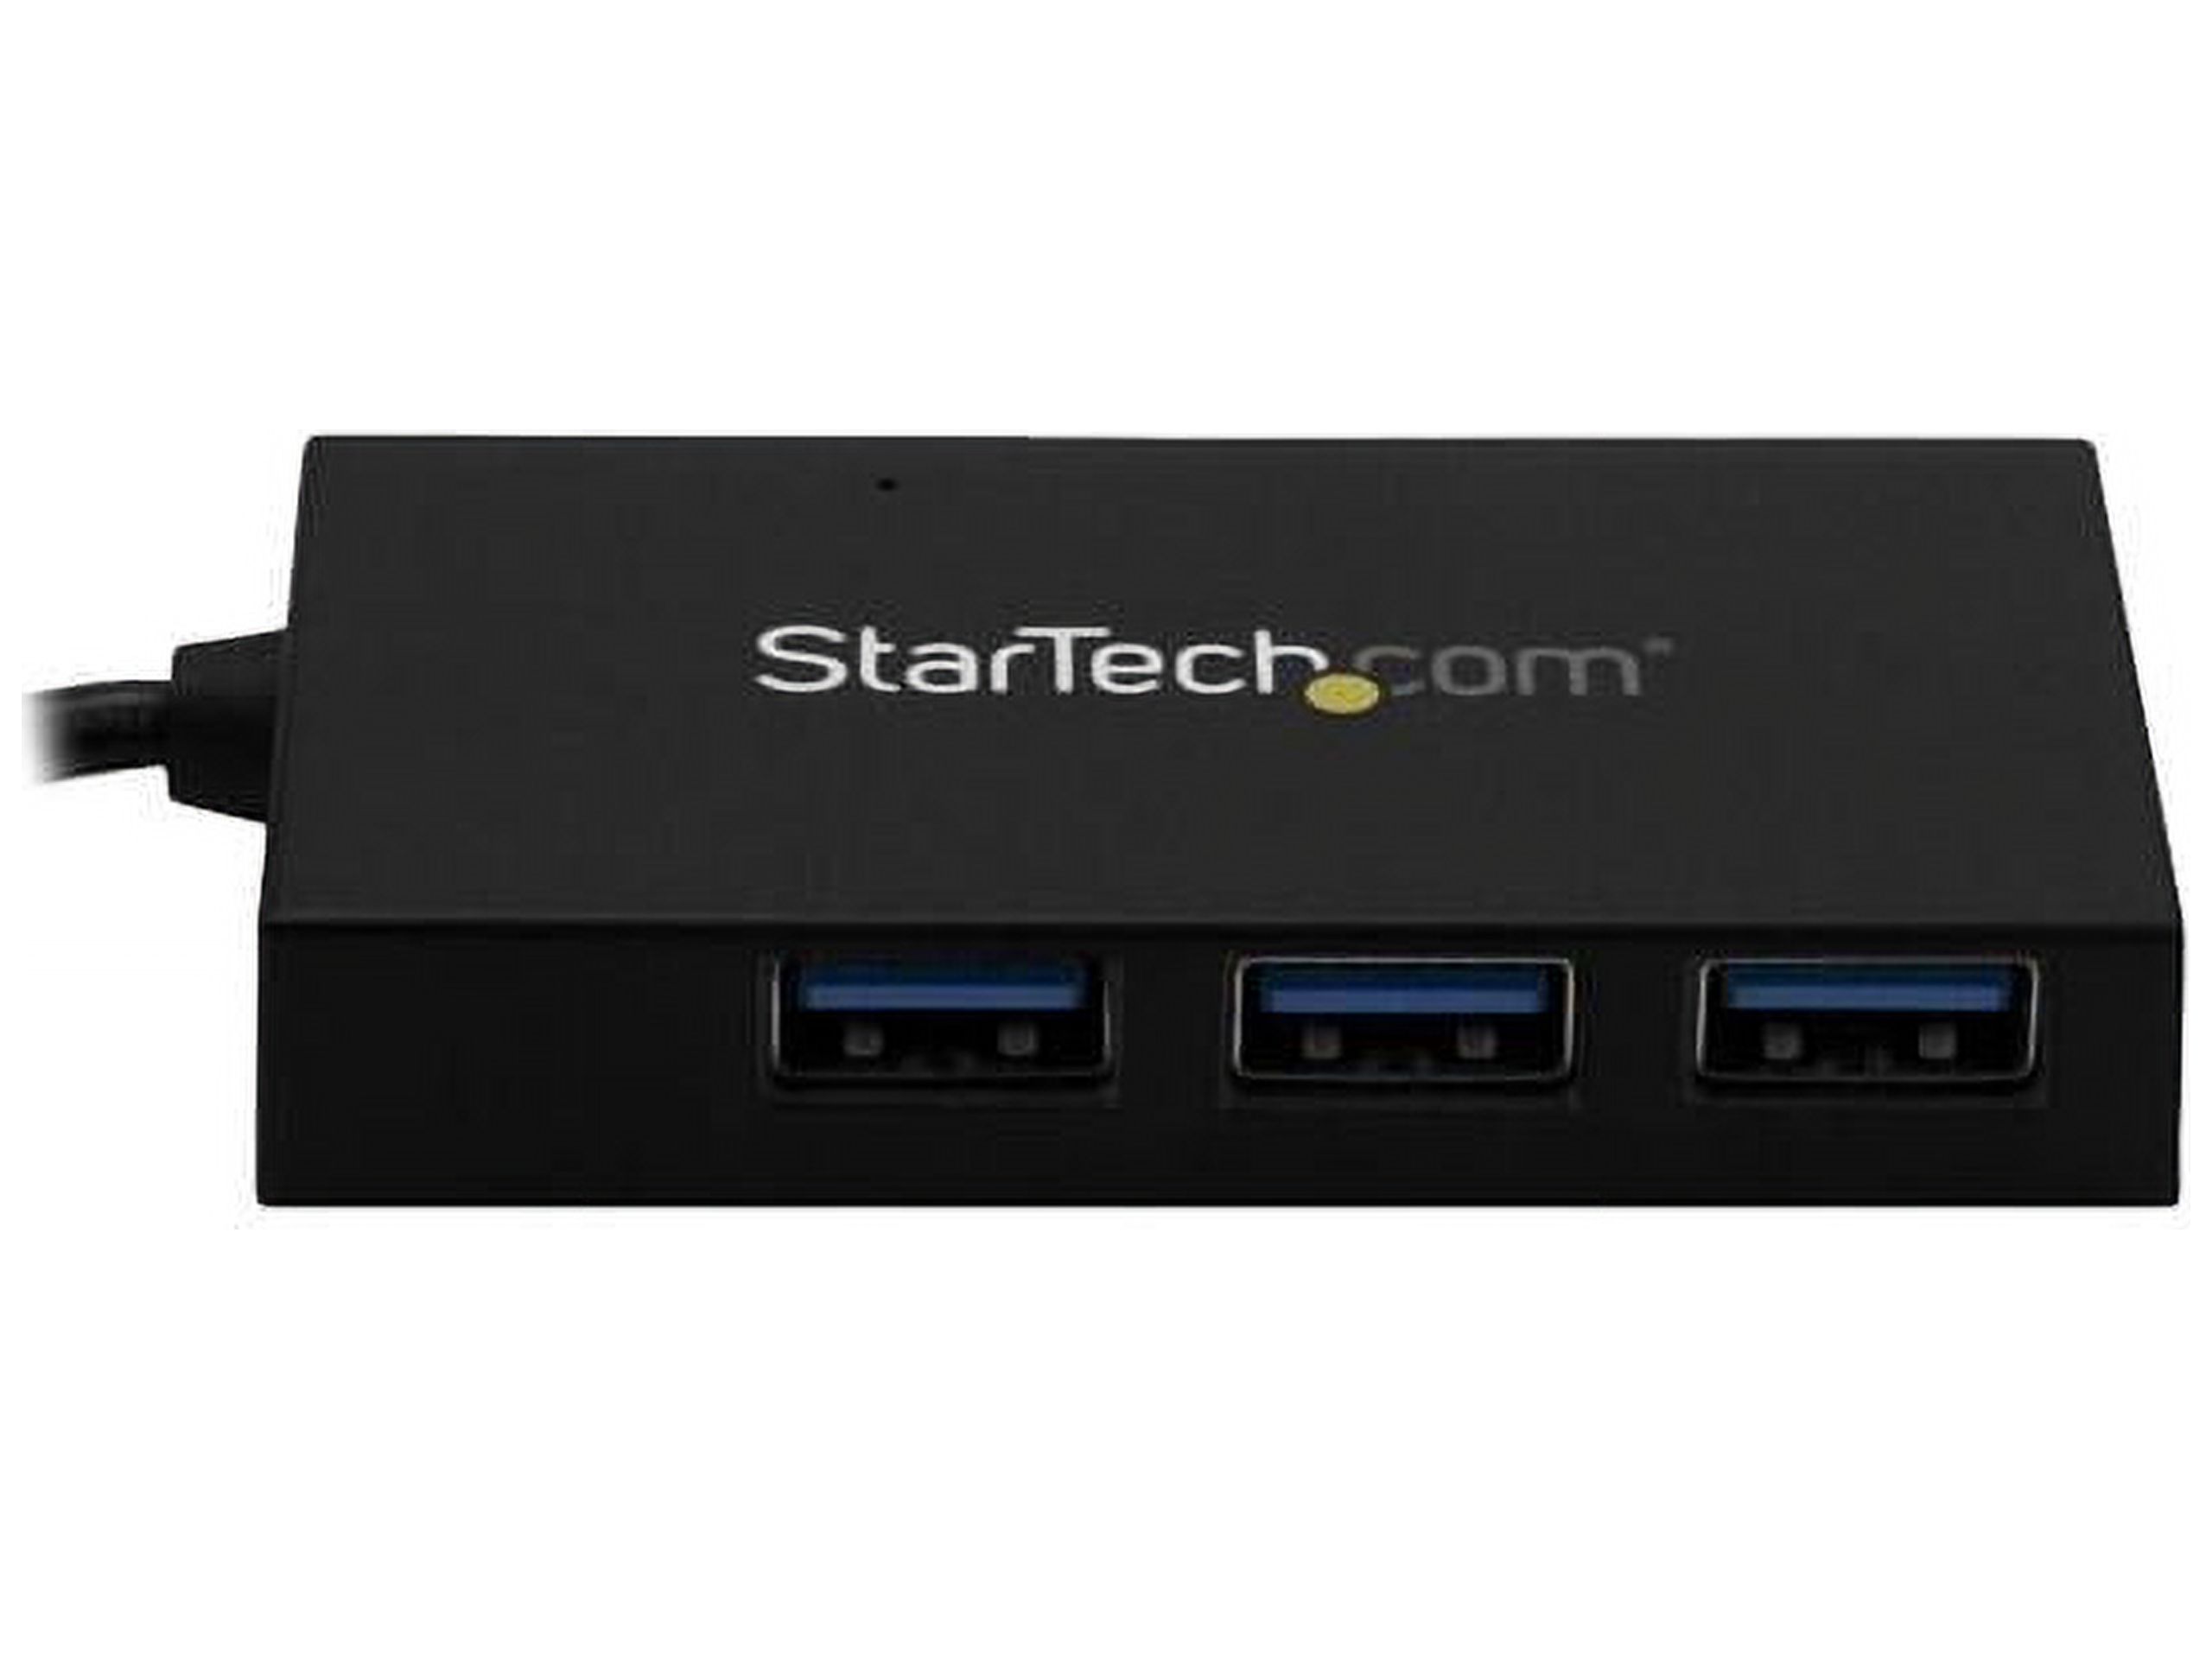 StarTech HB30A3A1CSFS 4 Port USB Hub - USB 3.0 - USB A to 3 x USB A and 1 x USB C - Includes Power Adapter - USB Port Expander - USB Port Hub - image 3 of 5